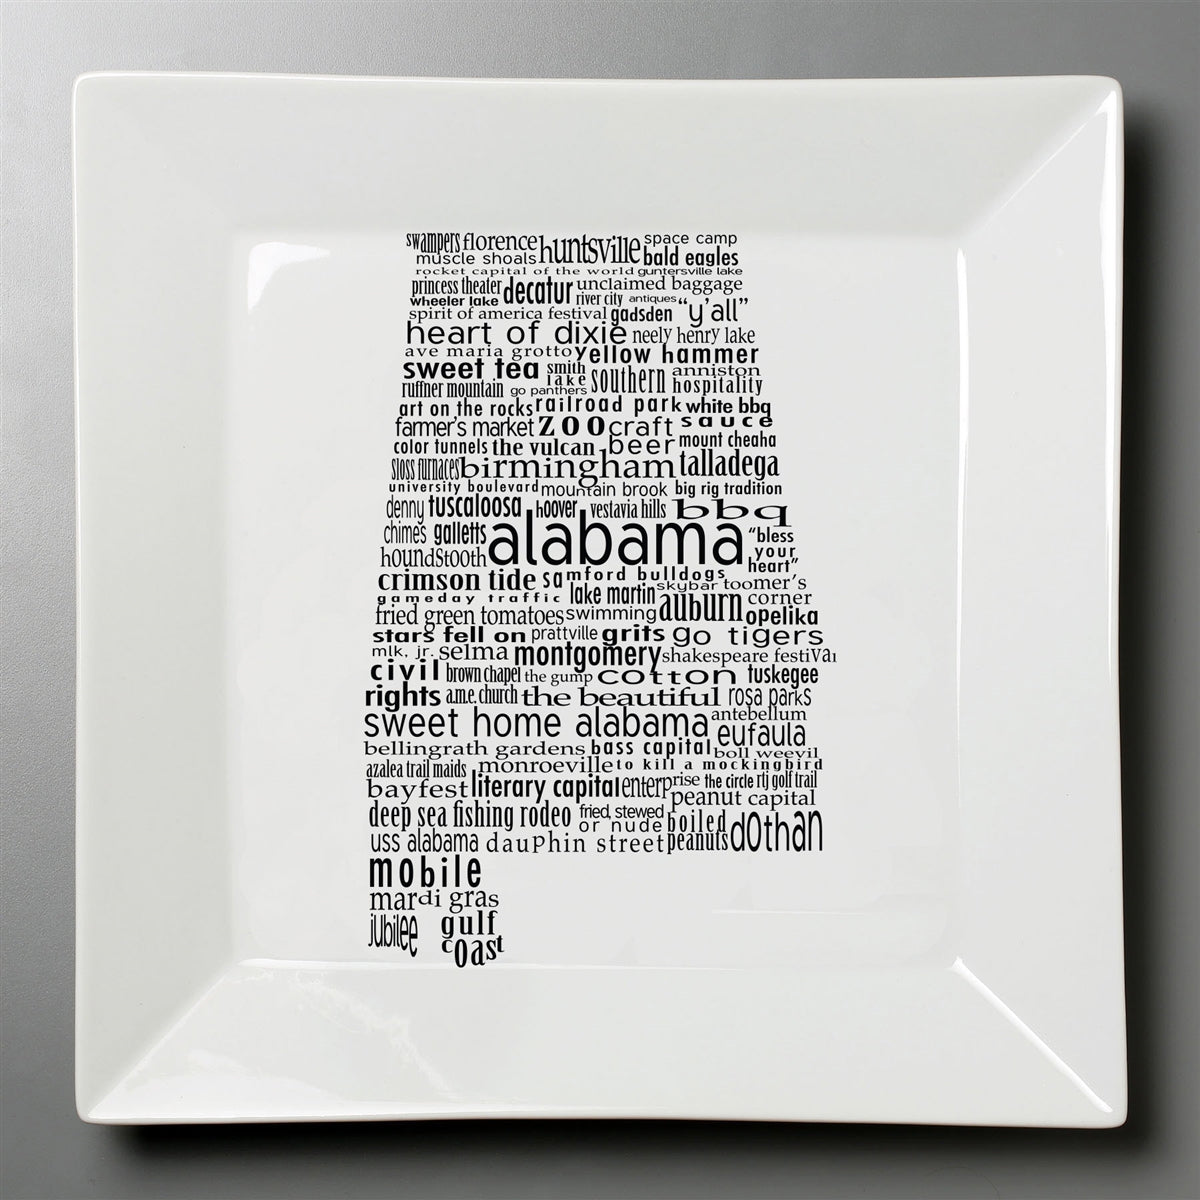 Alabama Dish - Small Square Plate